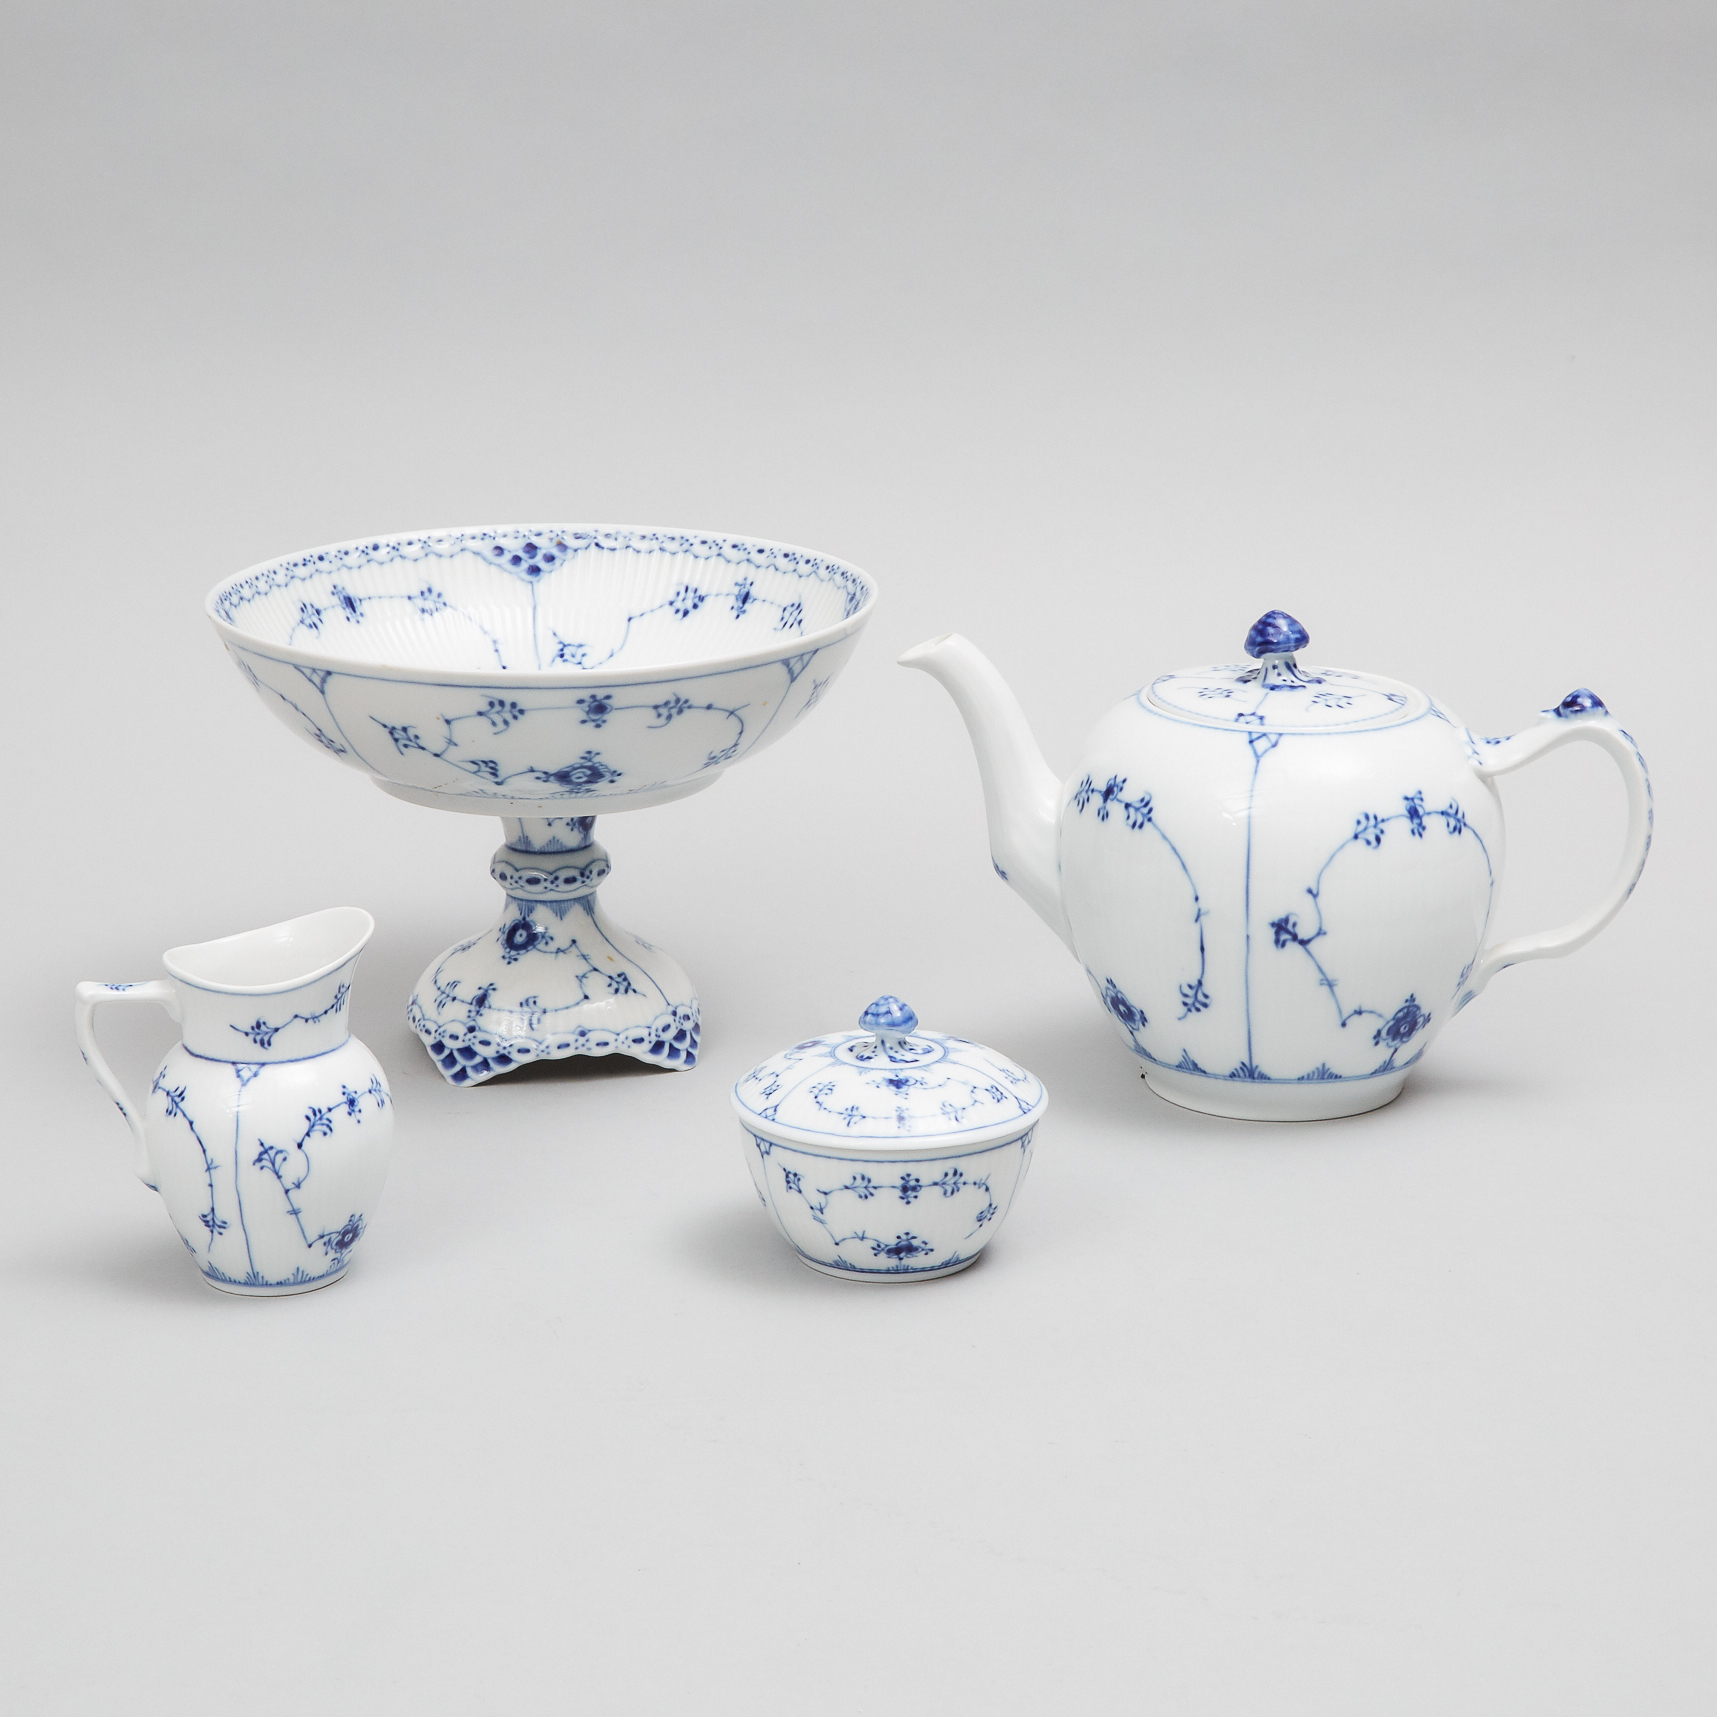 Royal Copenhagen 'Blue Fluted' Comport and Three-Piece Tea Service, 20th century